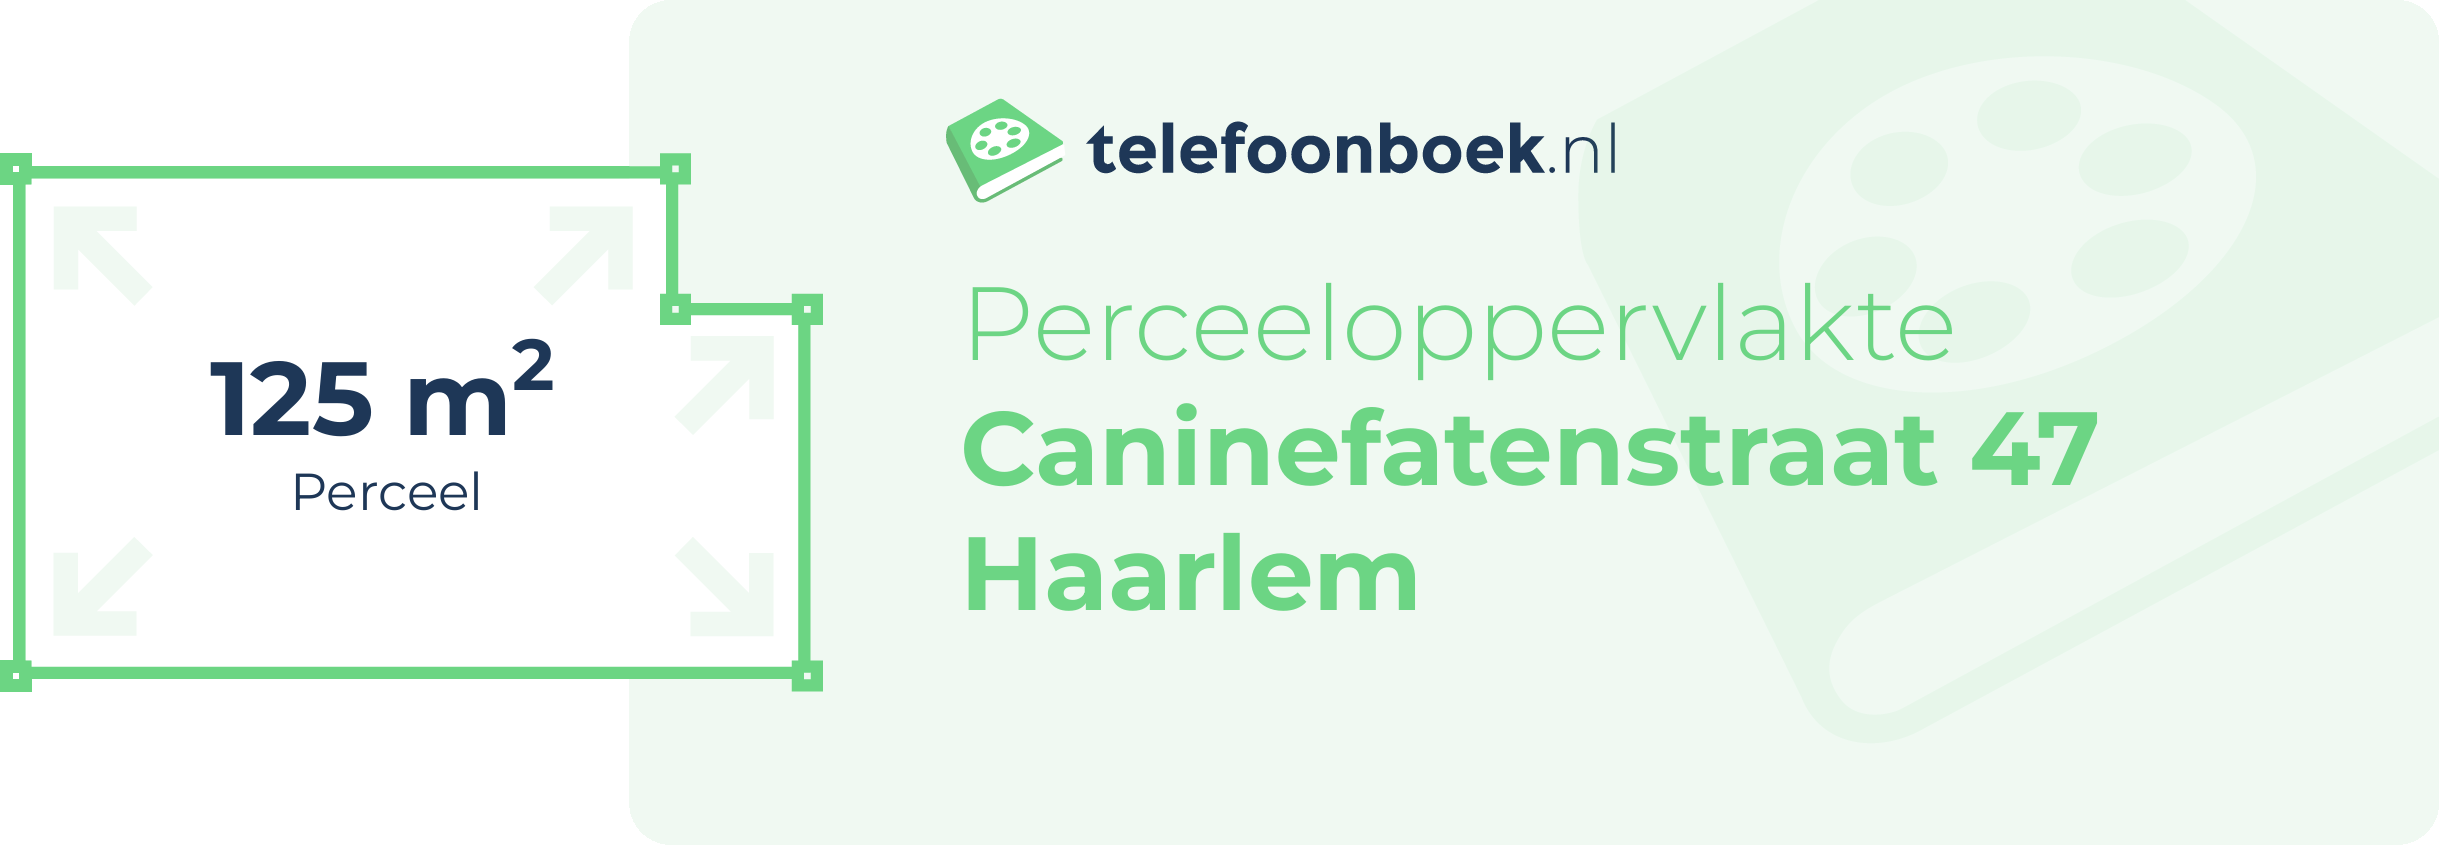 Perceeloppervlakte Caninefatenstraat 47 Haarlem